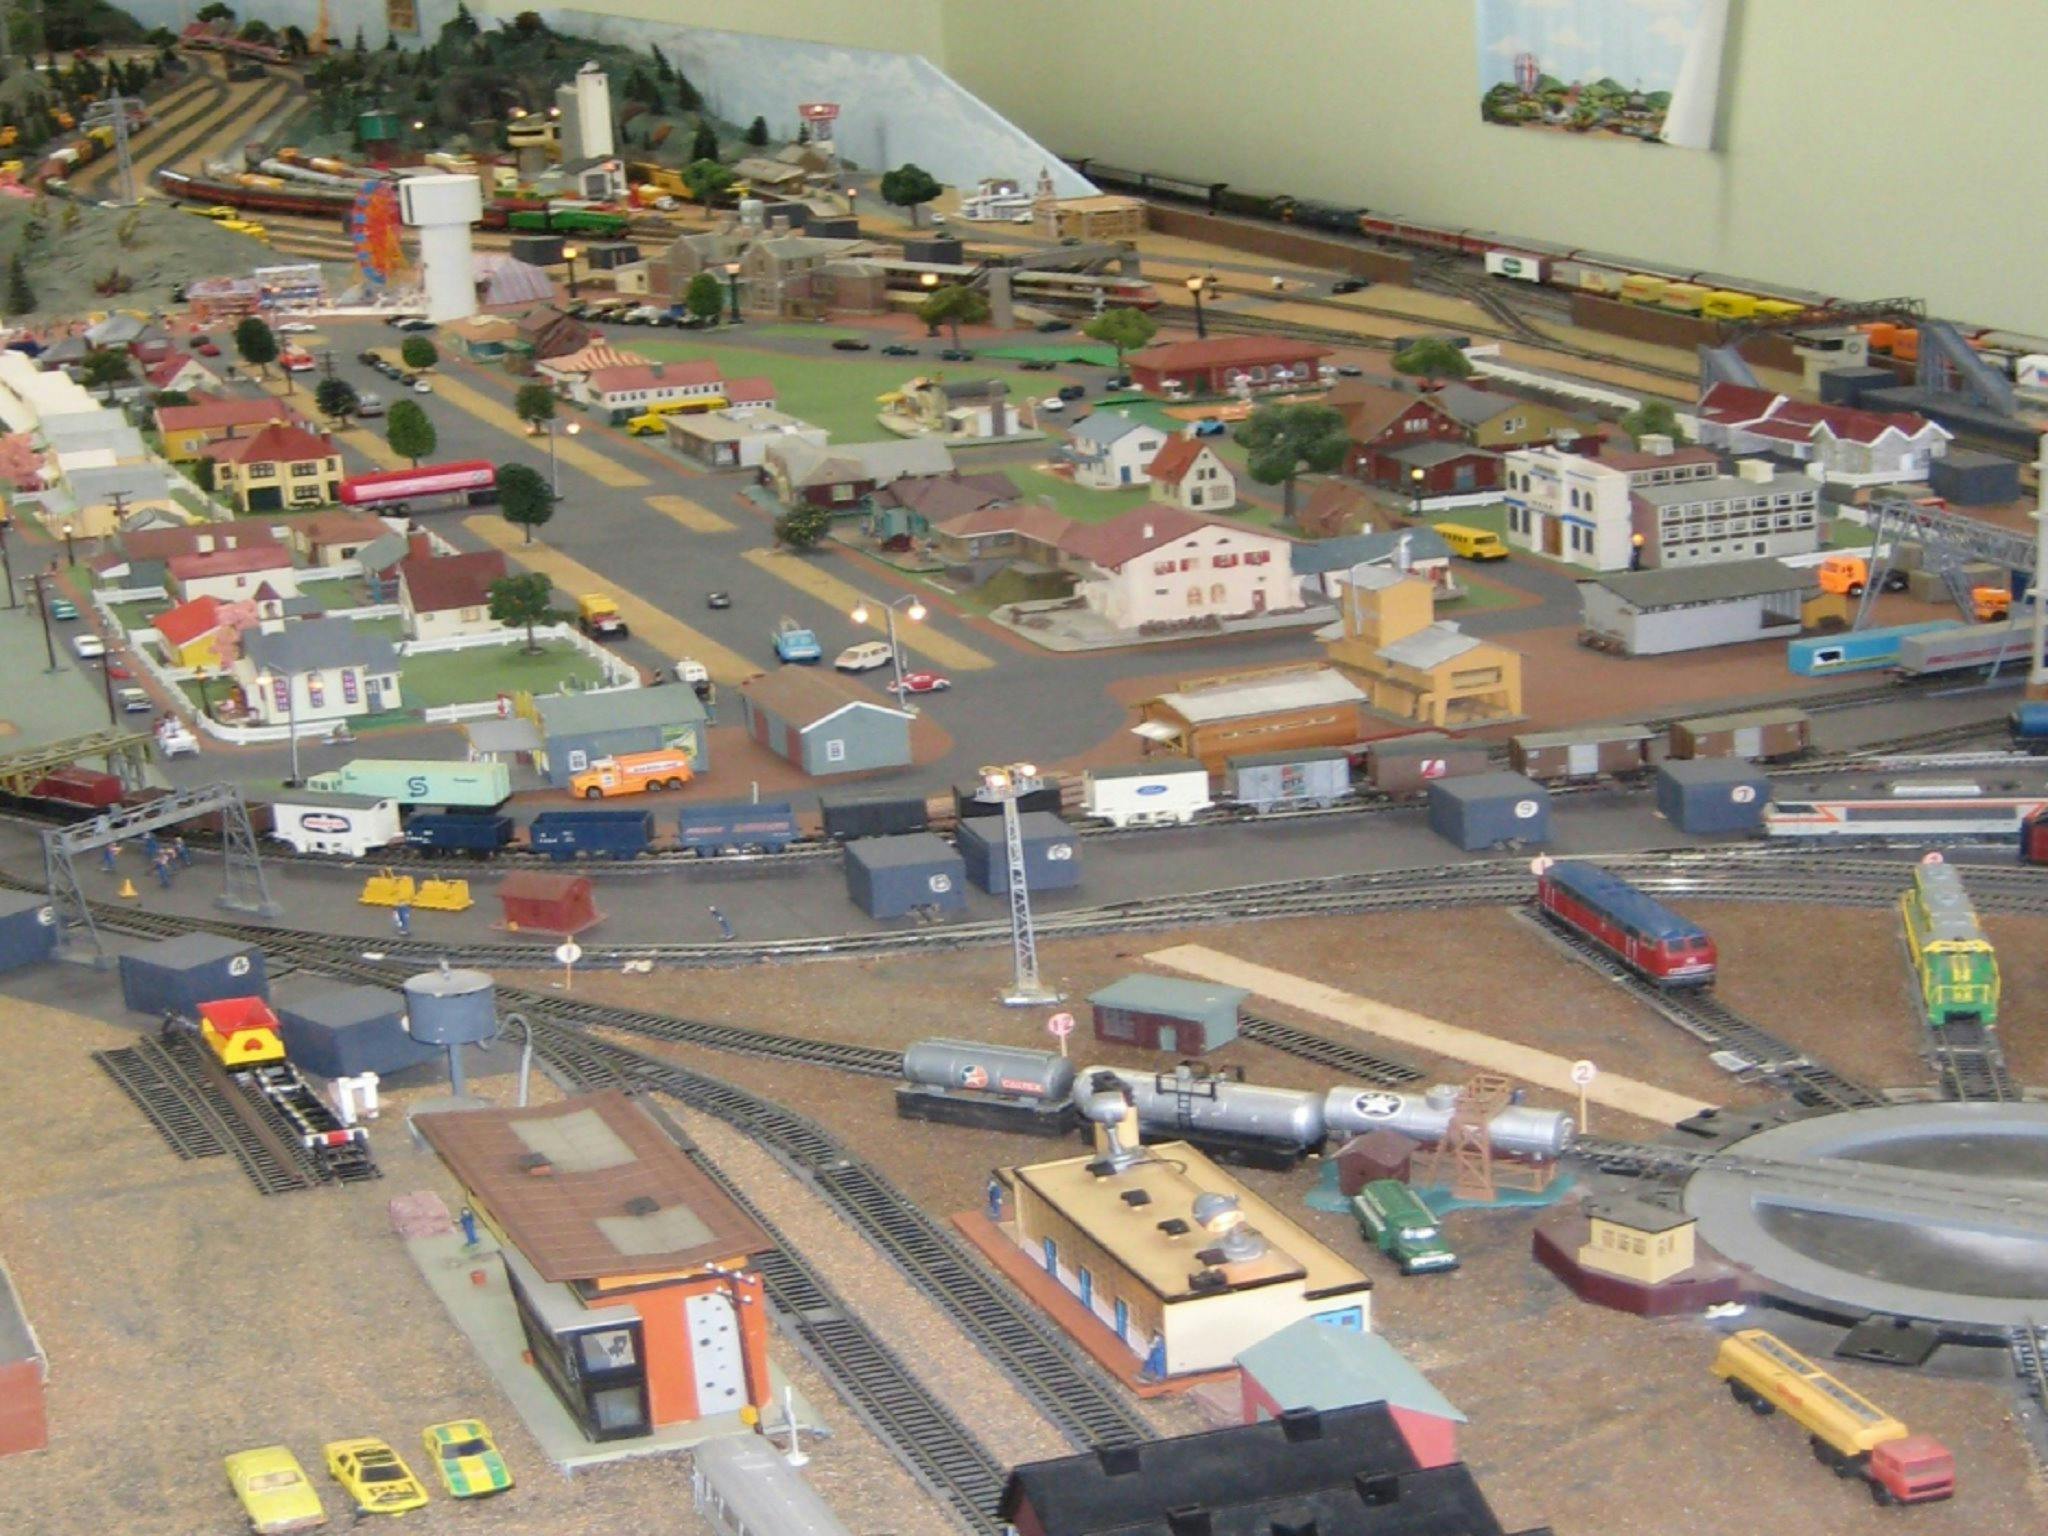 Heywood Model Trains